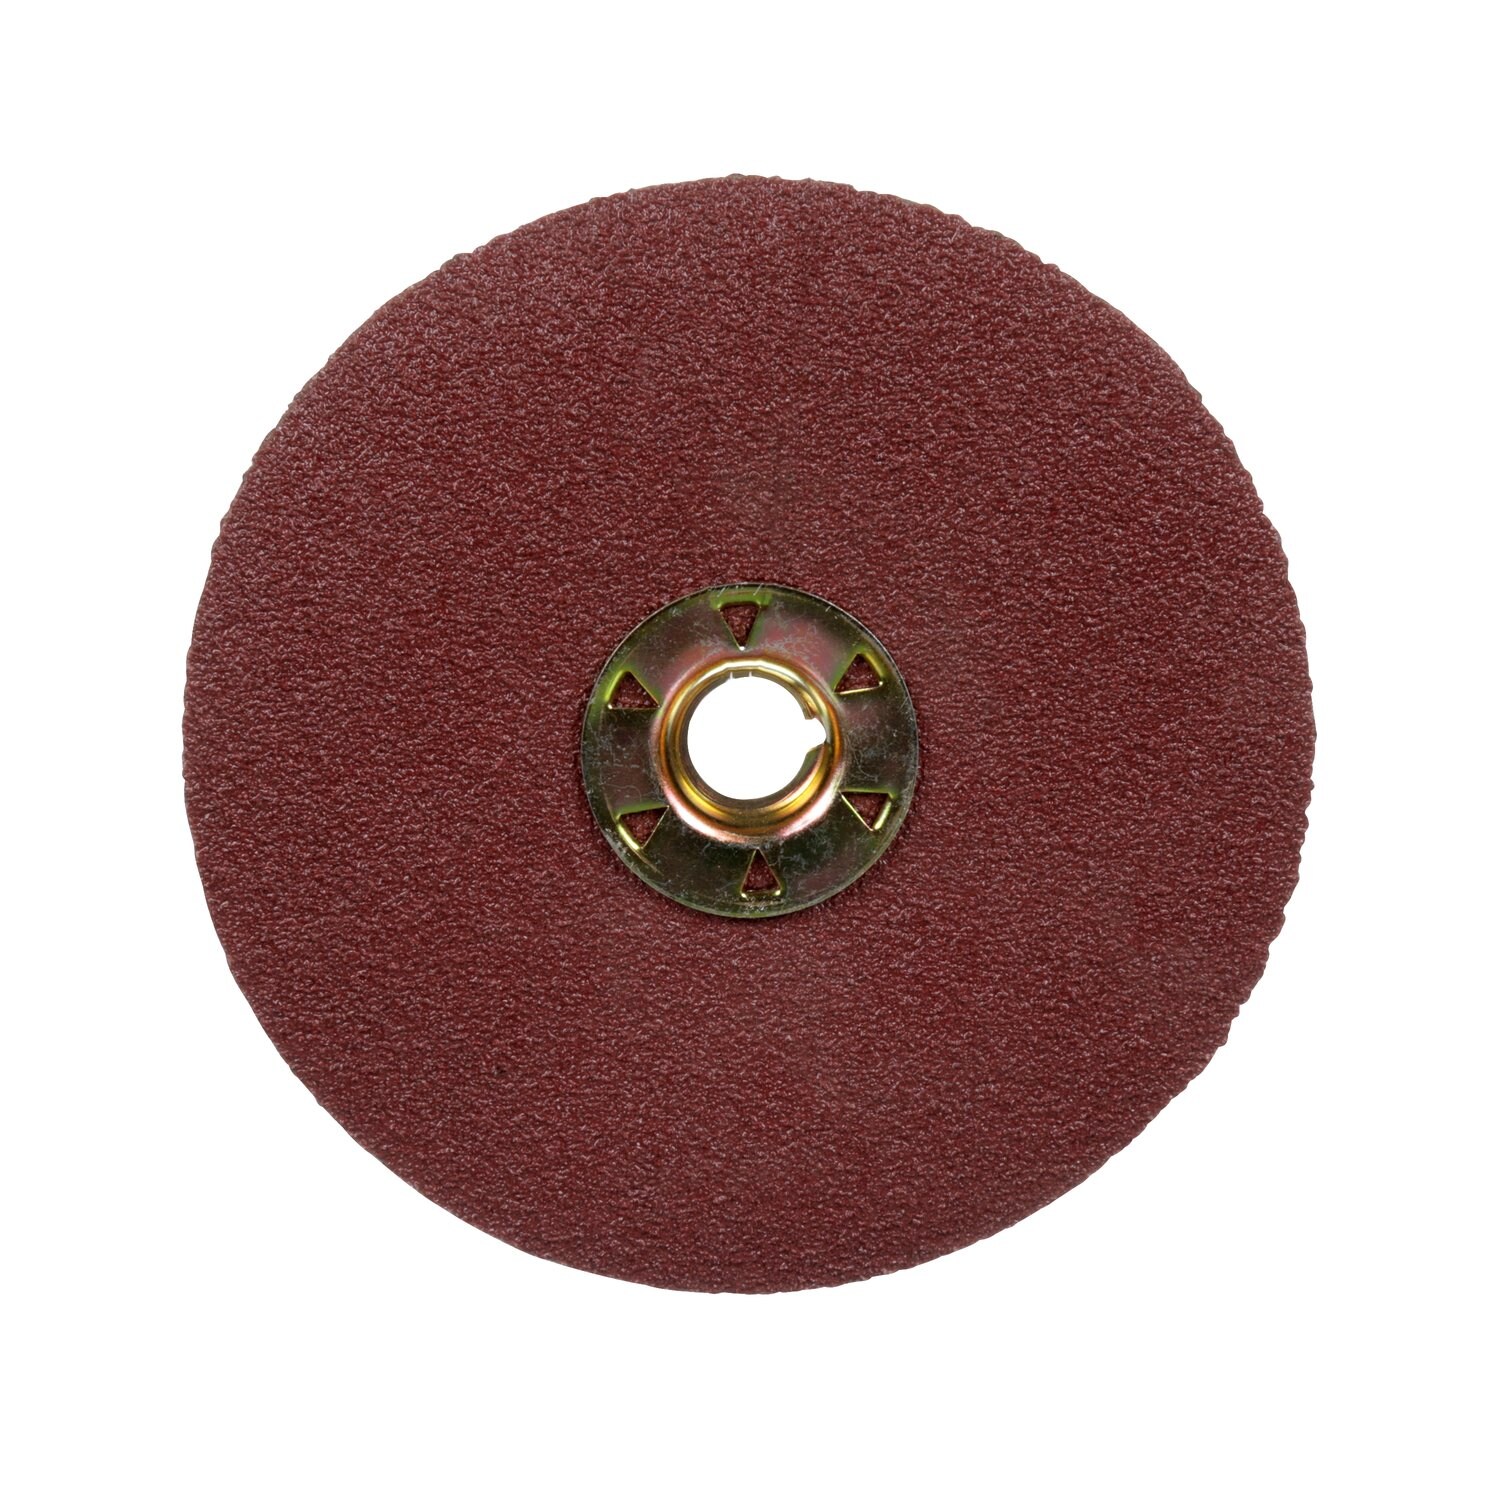 7010301268 - Standard Abrasives Quick Change Aluminum Oxide Resin Fiber Disc,
531104, 50, TSM, Brown, 5 in, Die QS500XM, 25/Car, 100 ea/Case